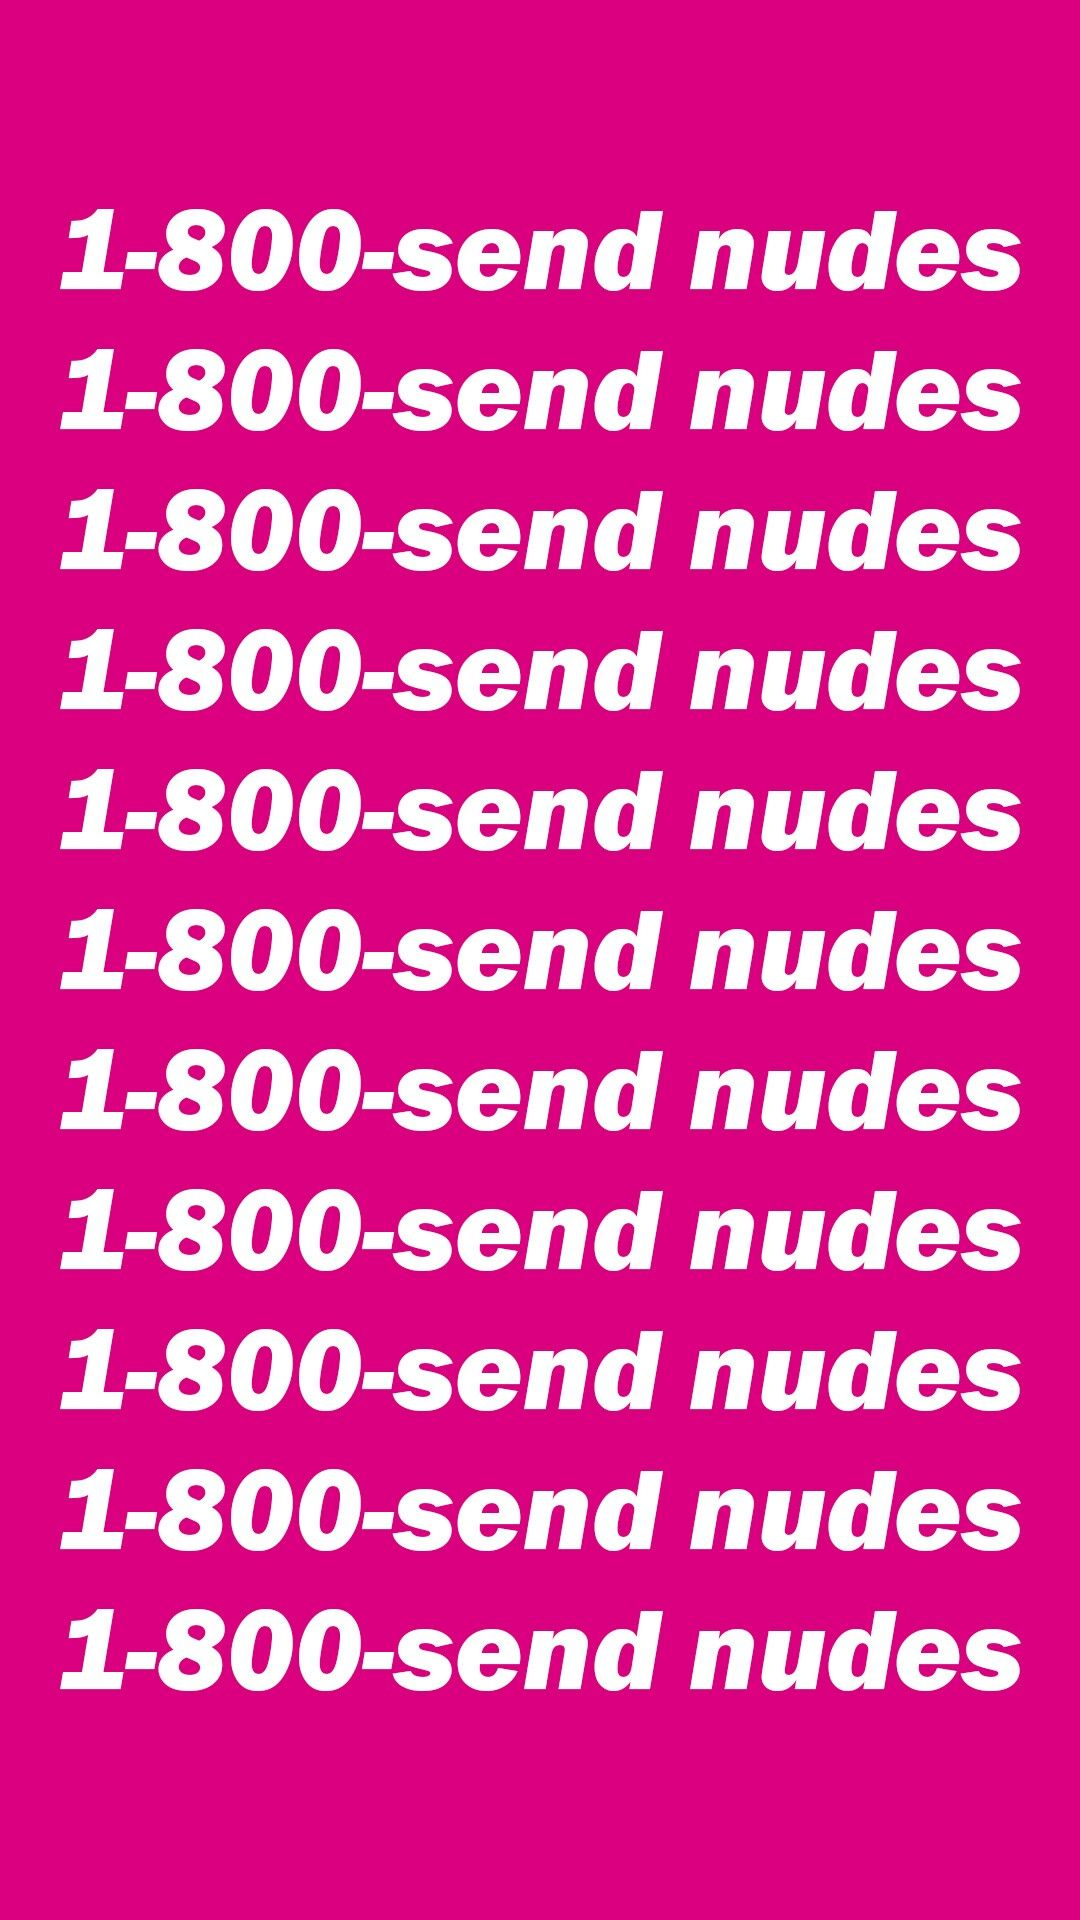 send nudes wallpaper